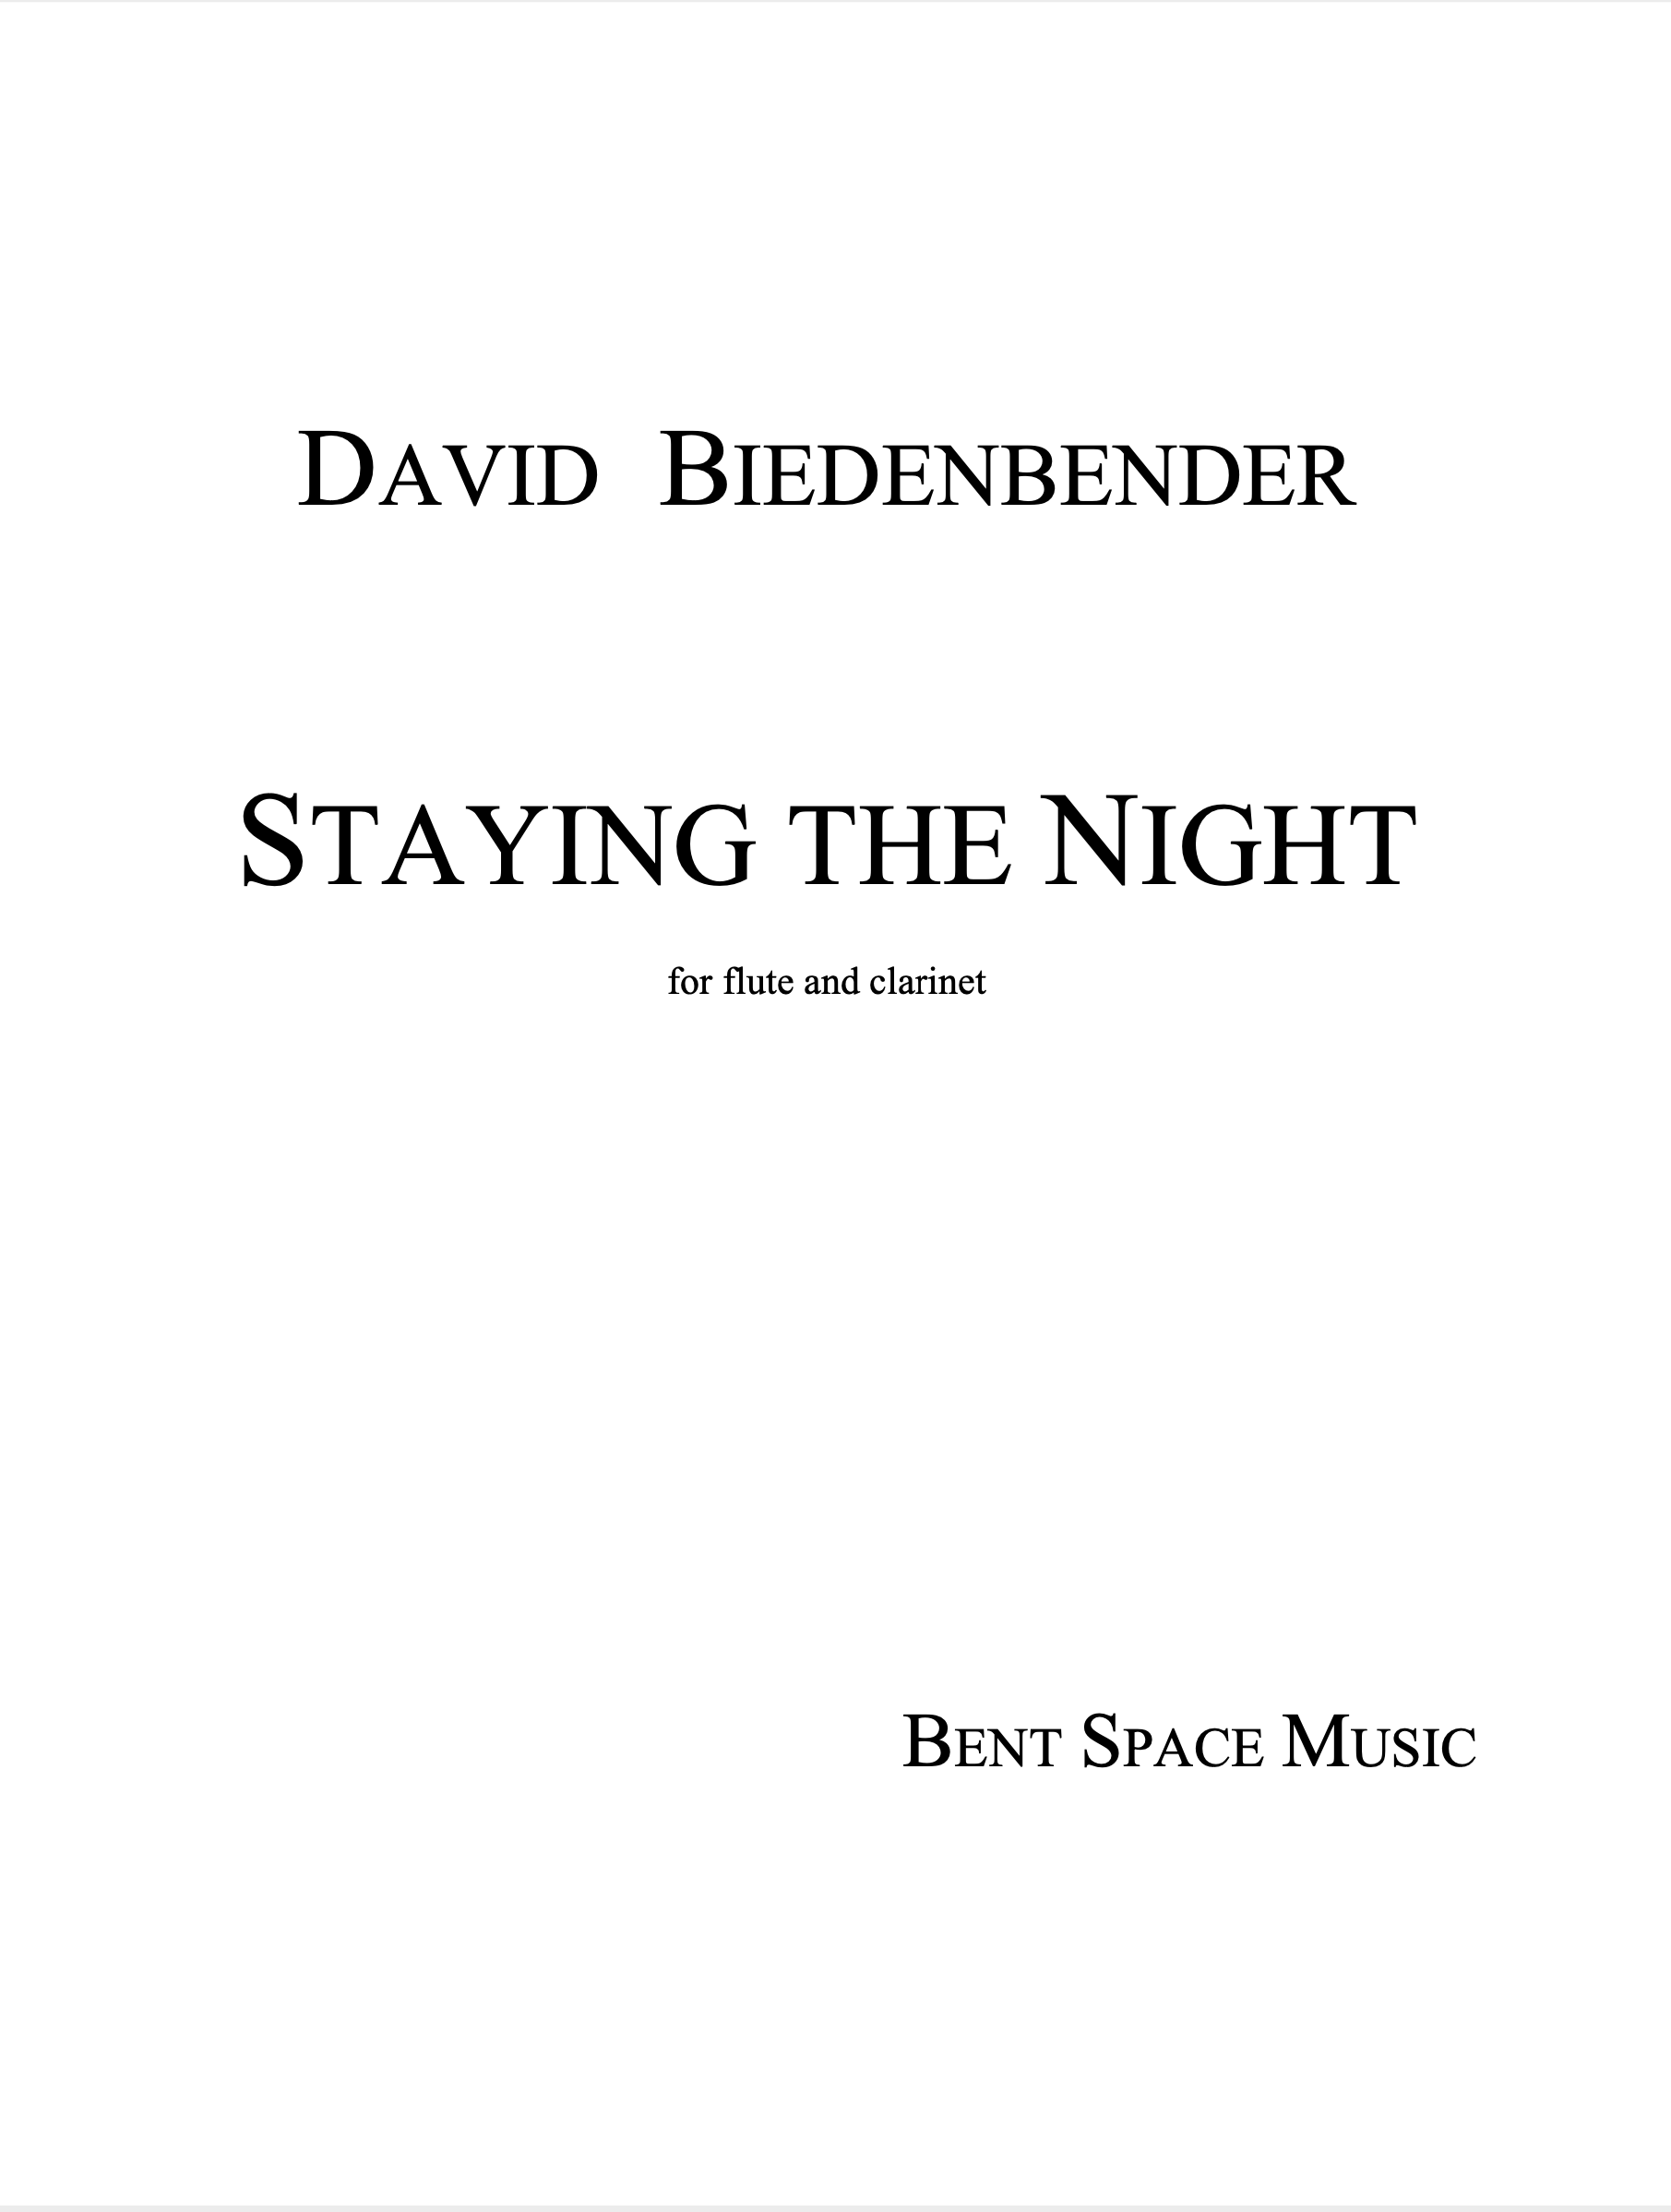 Staying The Night (Flute/Clarinet Version) by David Biedenbender